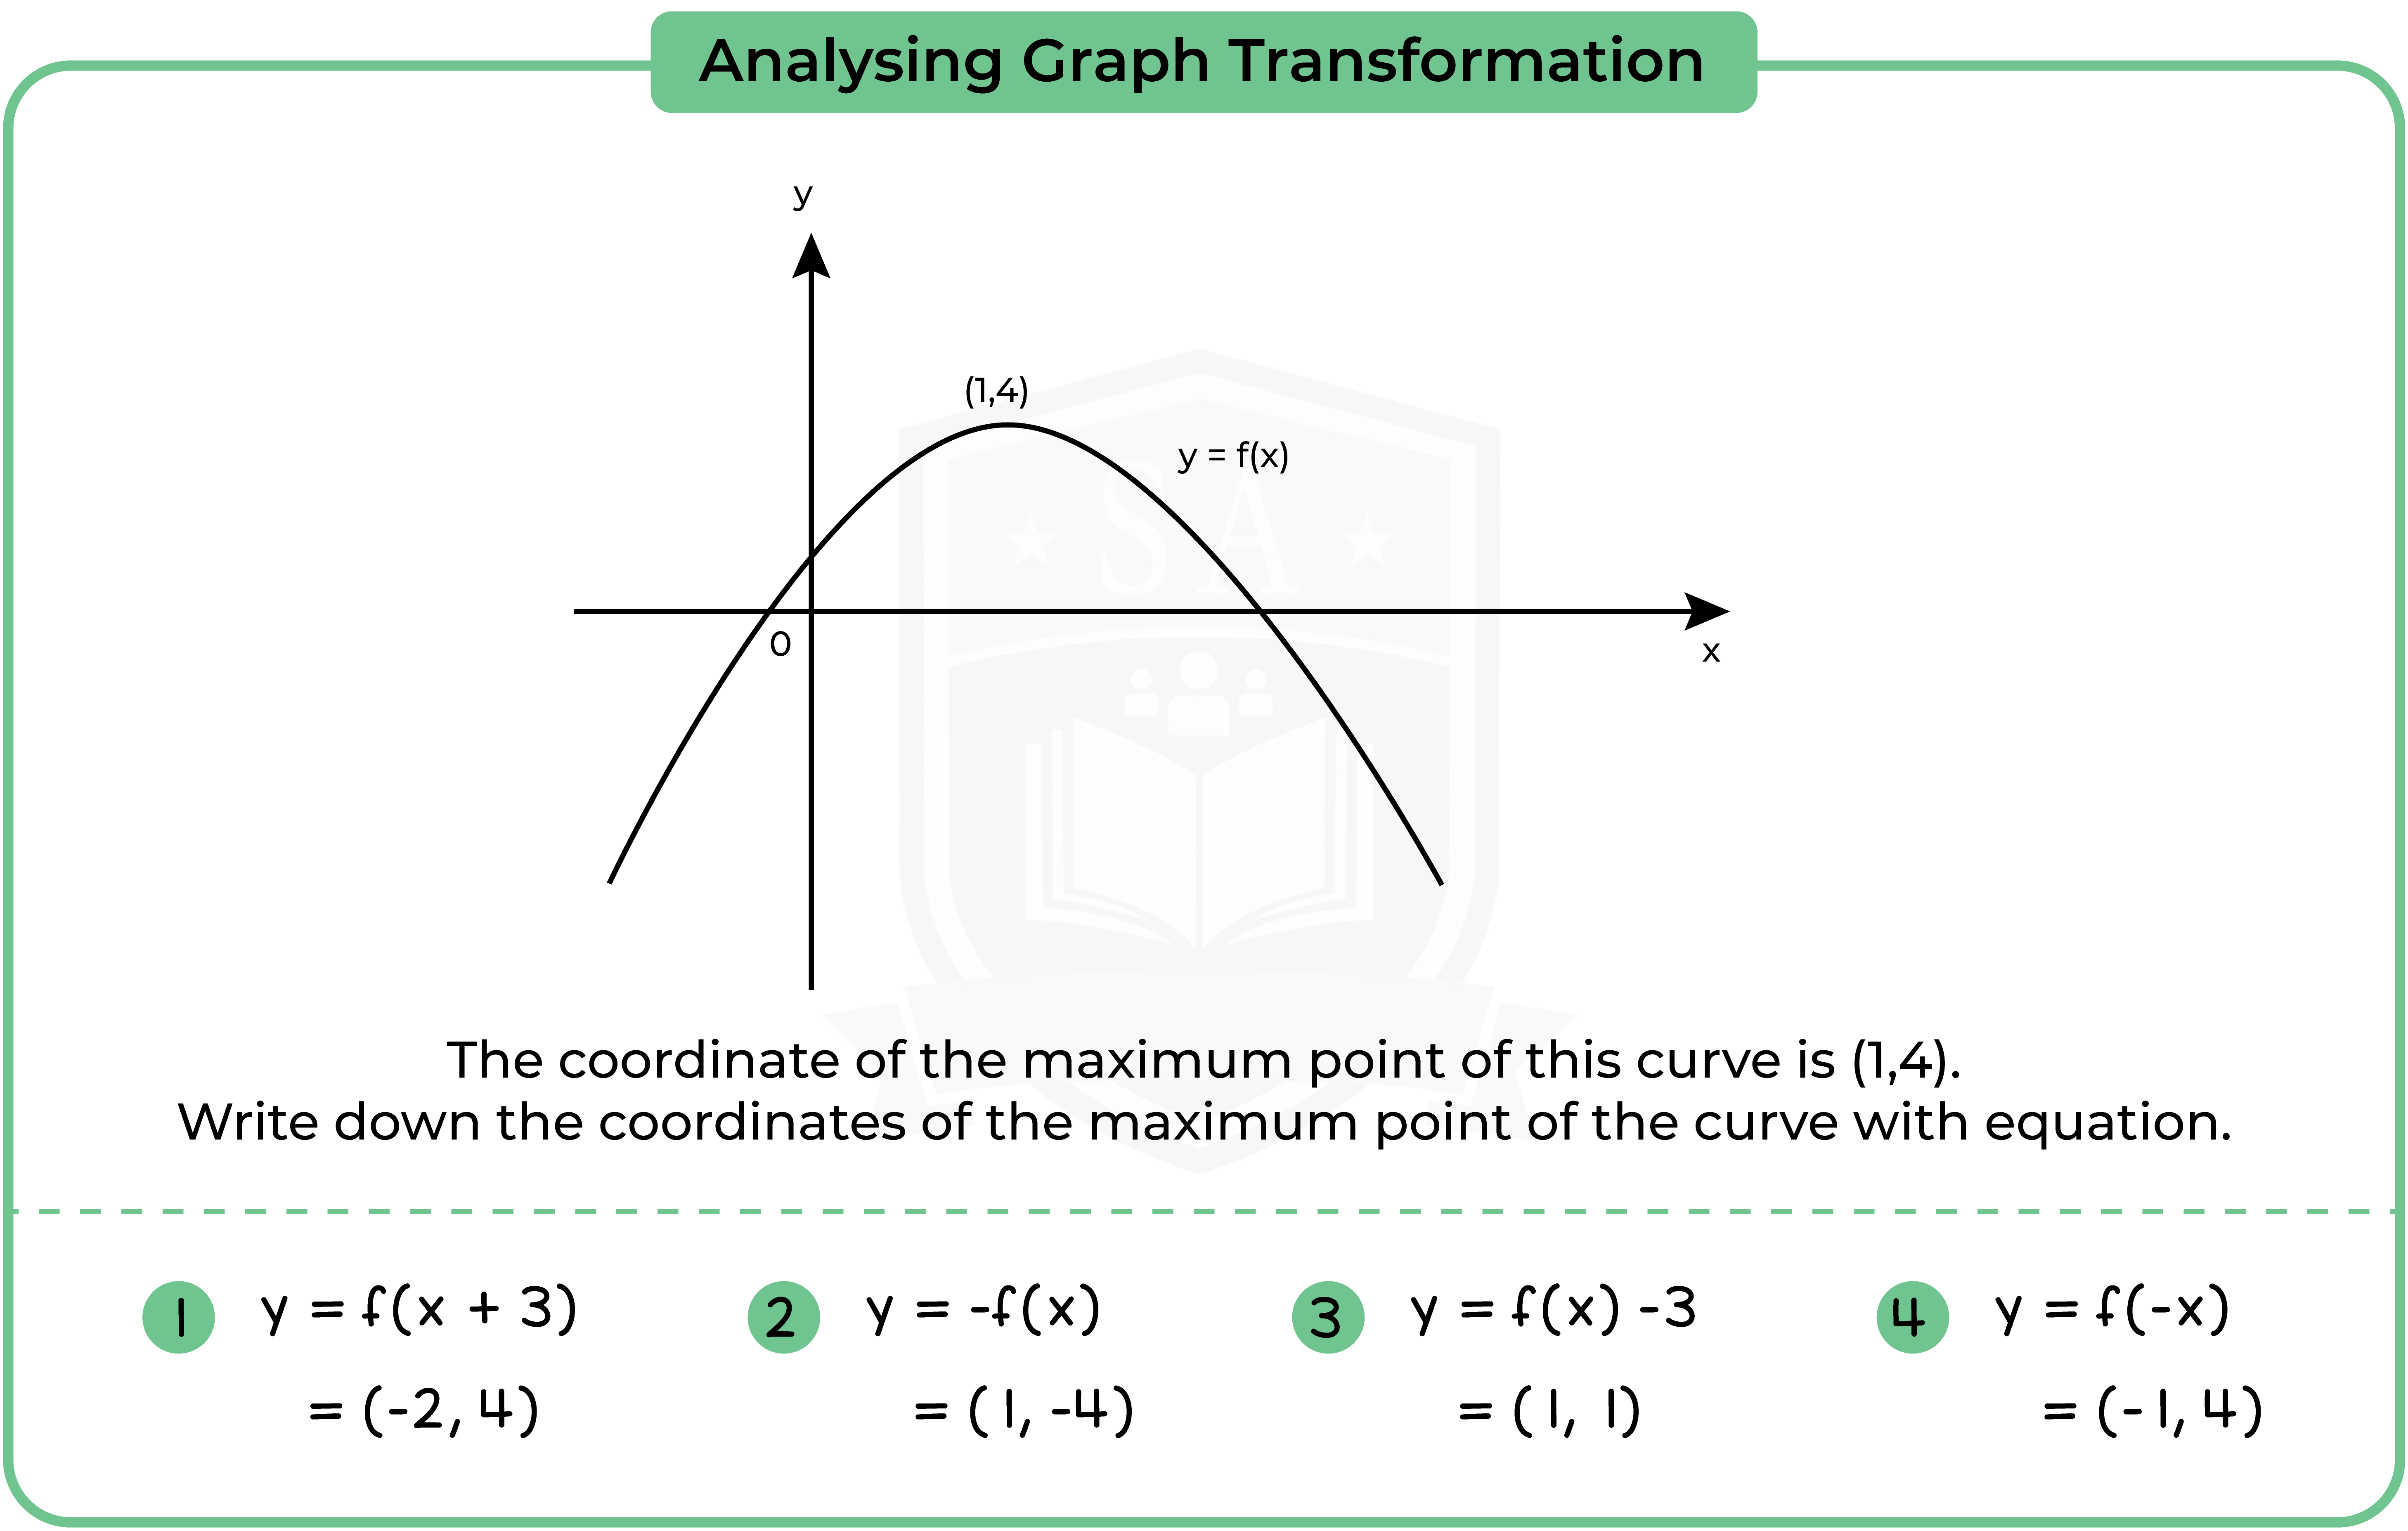 edexcel_igcse_mathematics a_topic 23_graphs_022_Analysing Graph Transformation